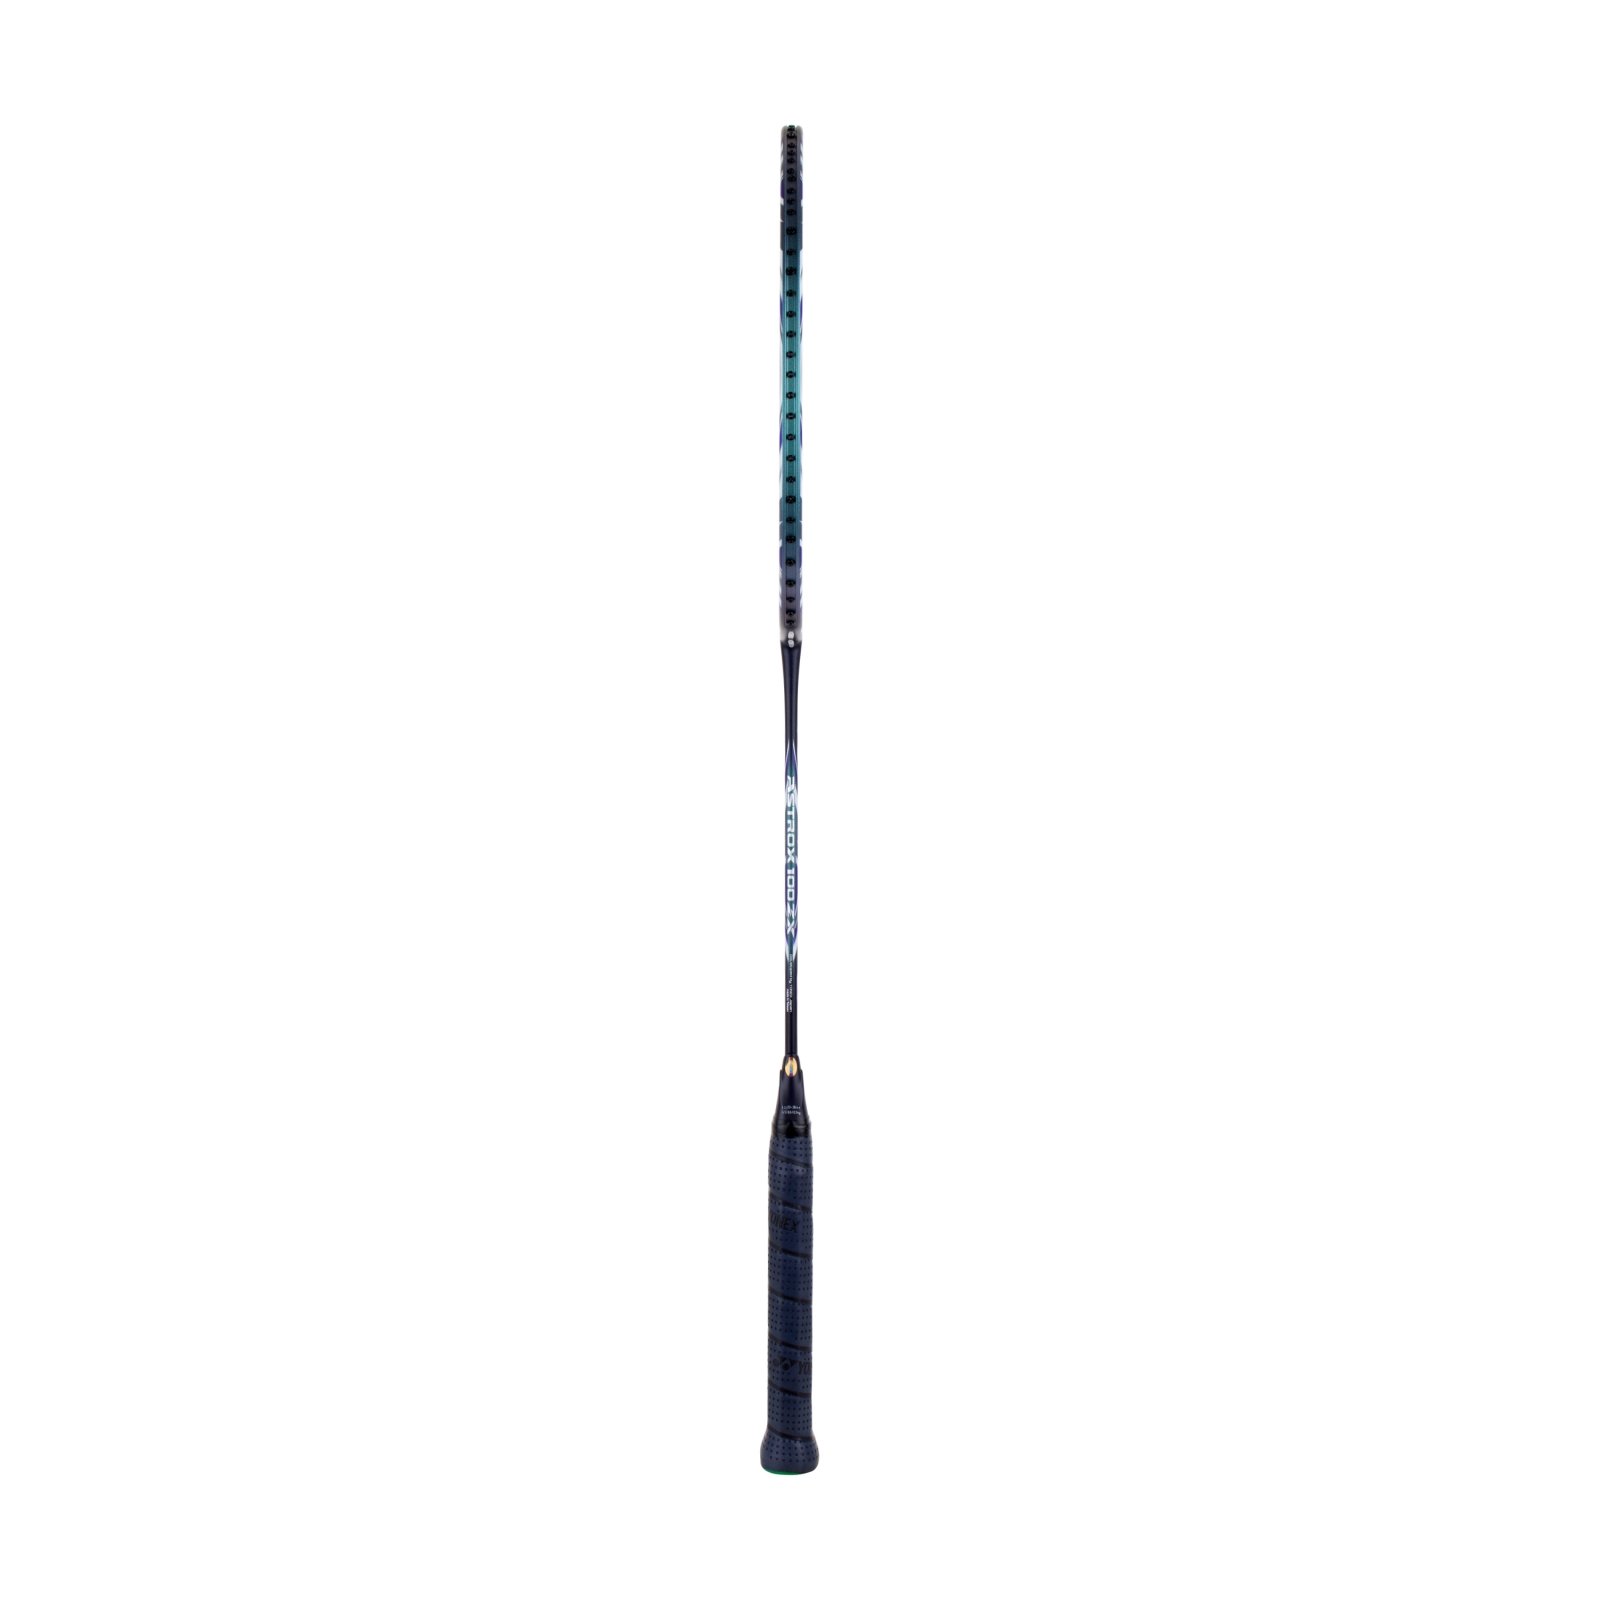 ASTROX 100 ZX - Astrox - Rakiety do badmintona - Badminton - Yonex 